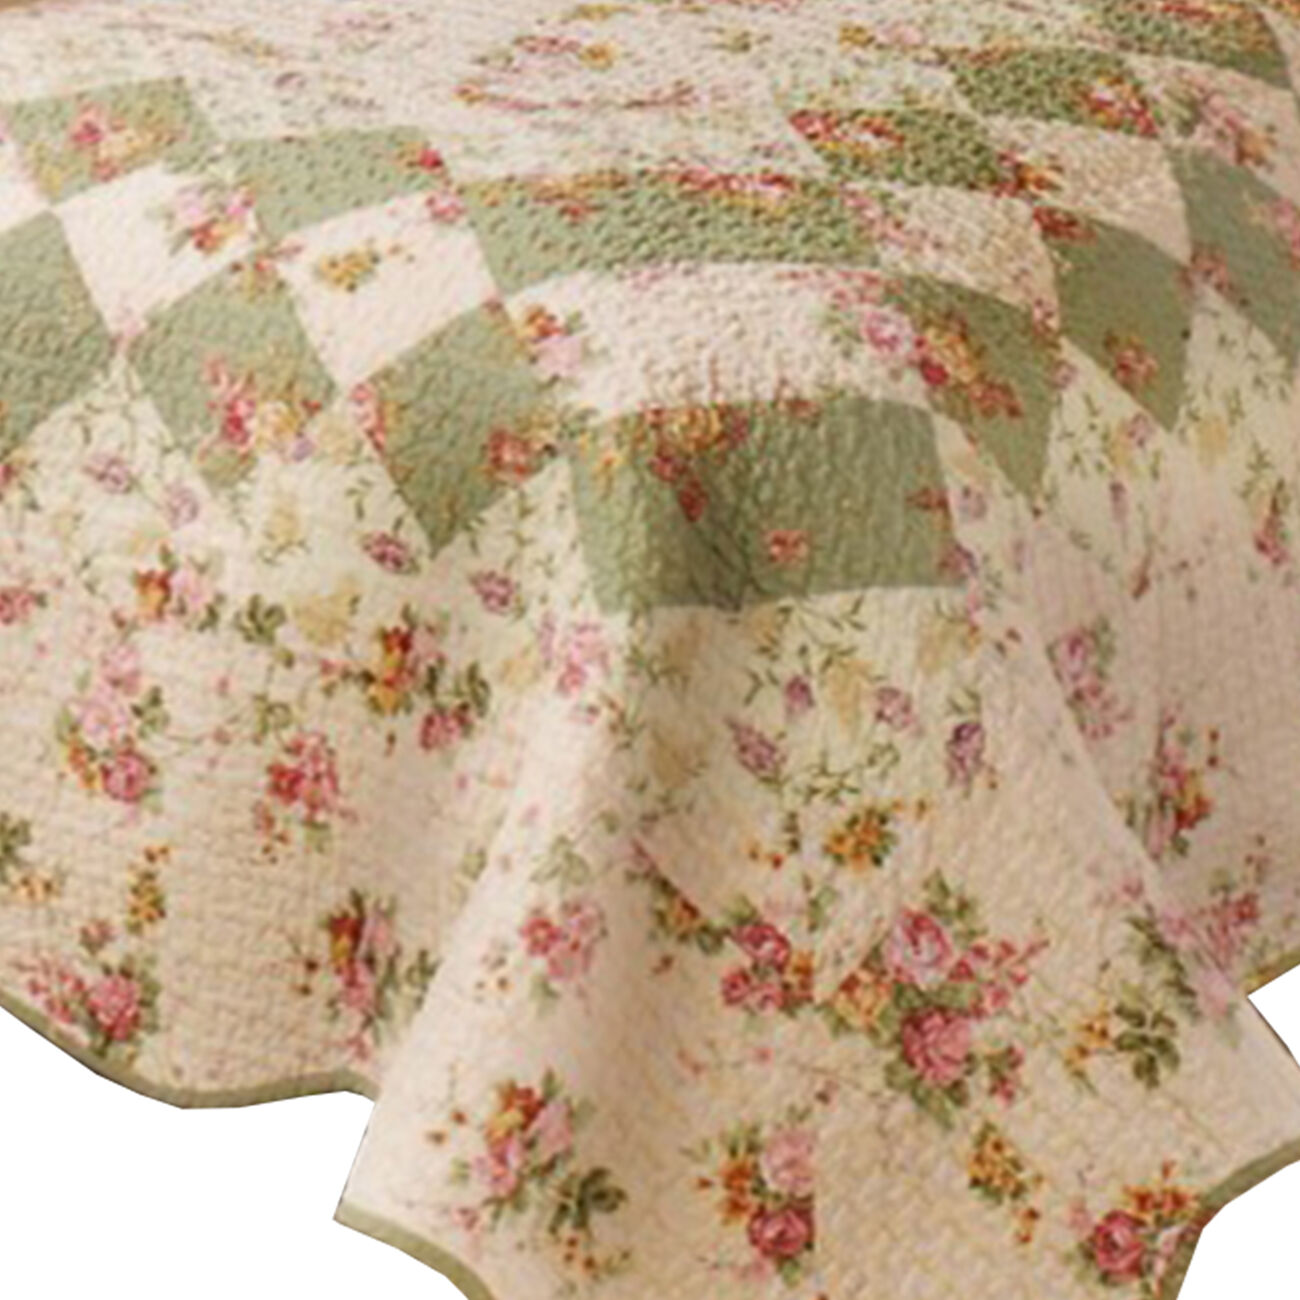 Denali 3 Piece Fabric Queen Size Quilt Set with Floral Prints, Multicolor